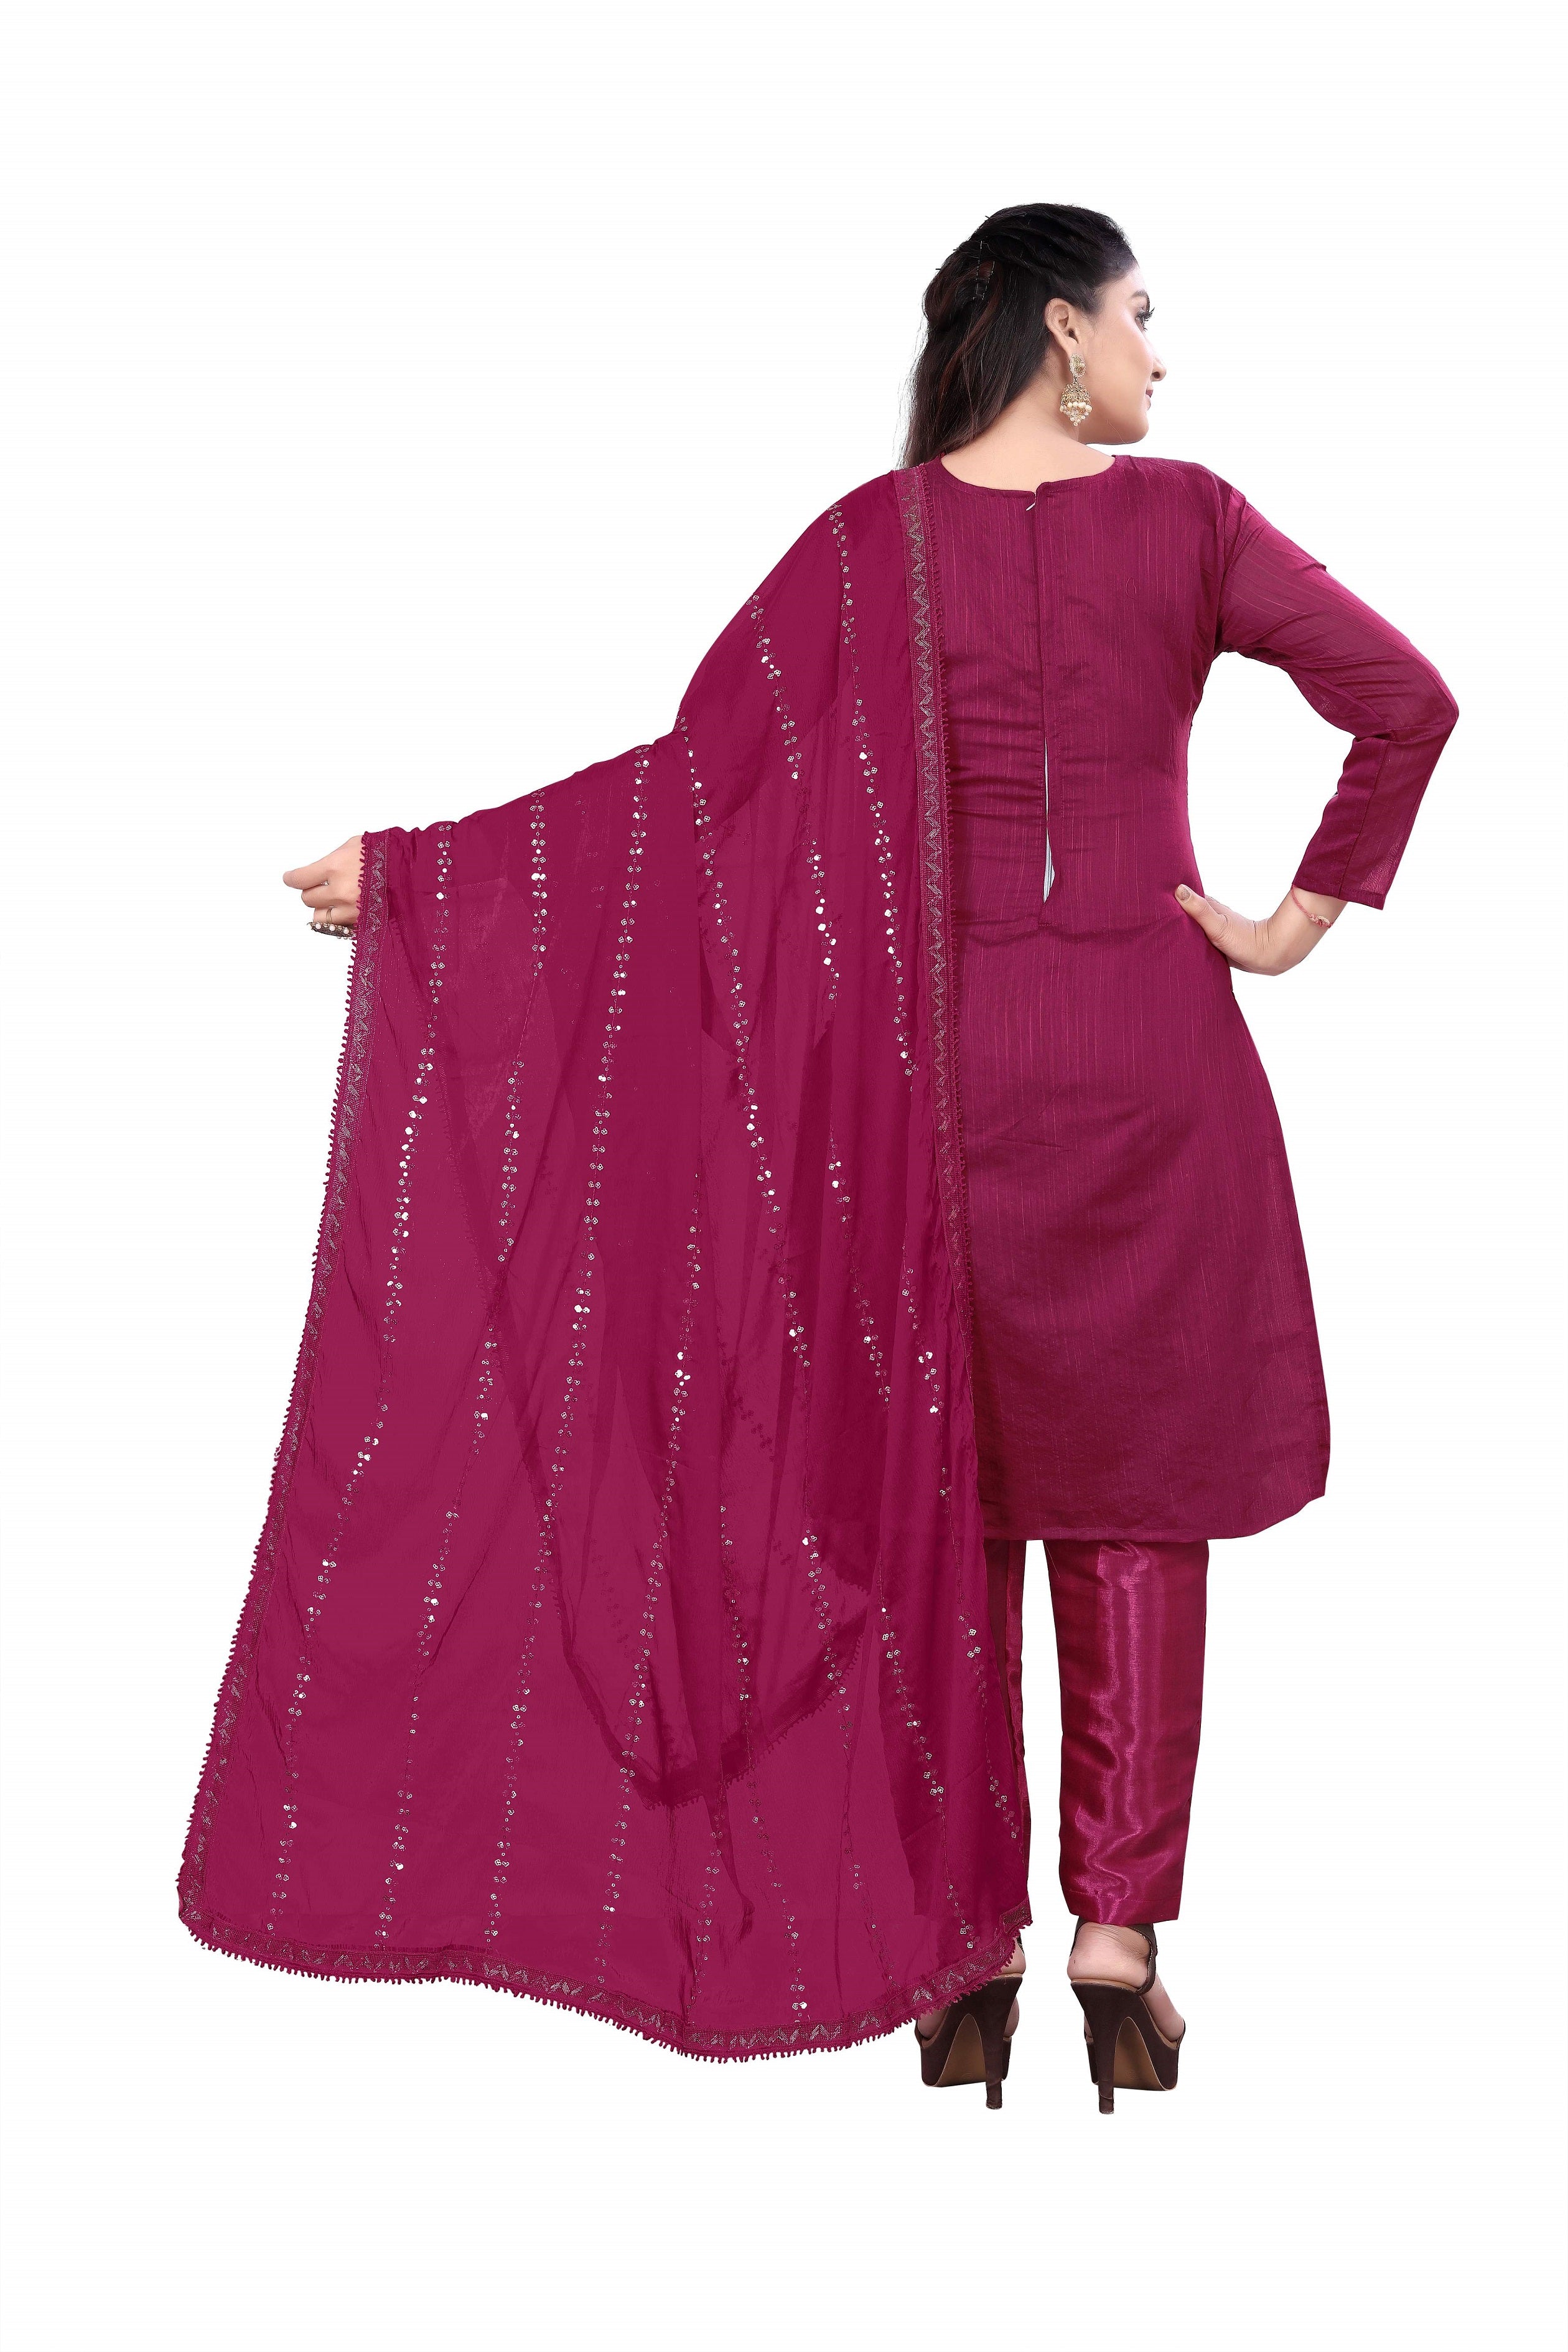 Women's Rani Colour Semi-Stitched Suit Sets - Dwija Fashion